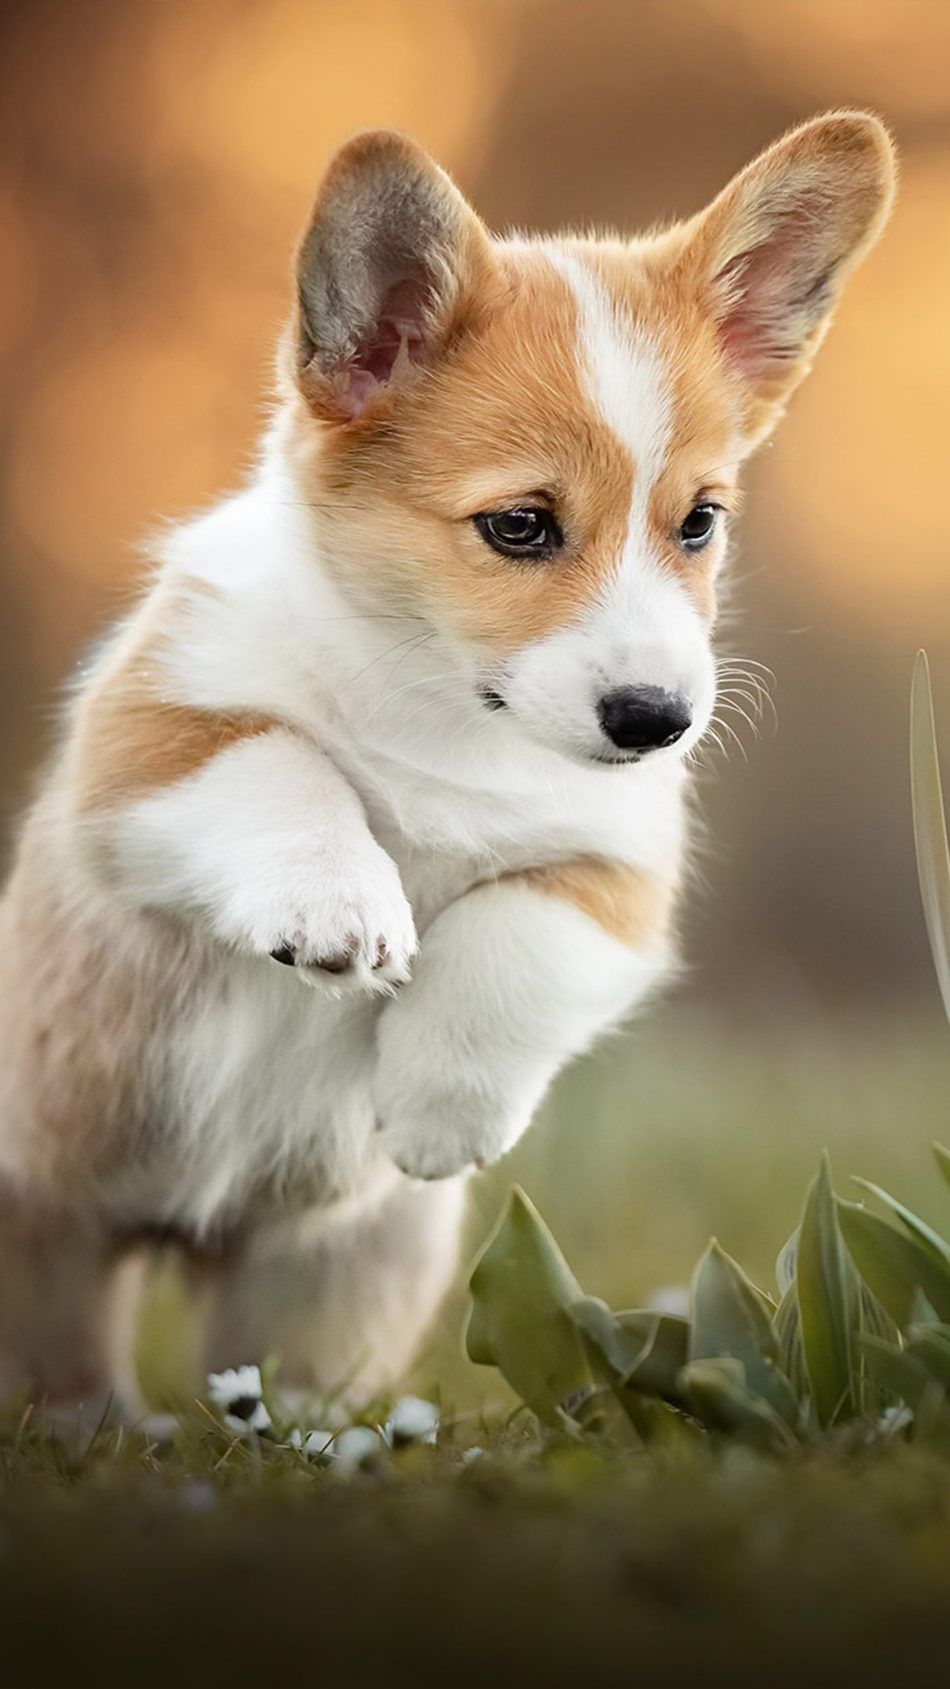 Corgi Puppy Pet Dog 4K Ultra HD Mobile Wallpaper. Corgi puppy, Cute puppy wallpaper, Cute dog wallpaper